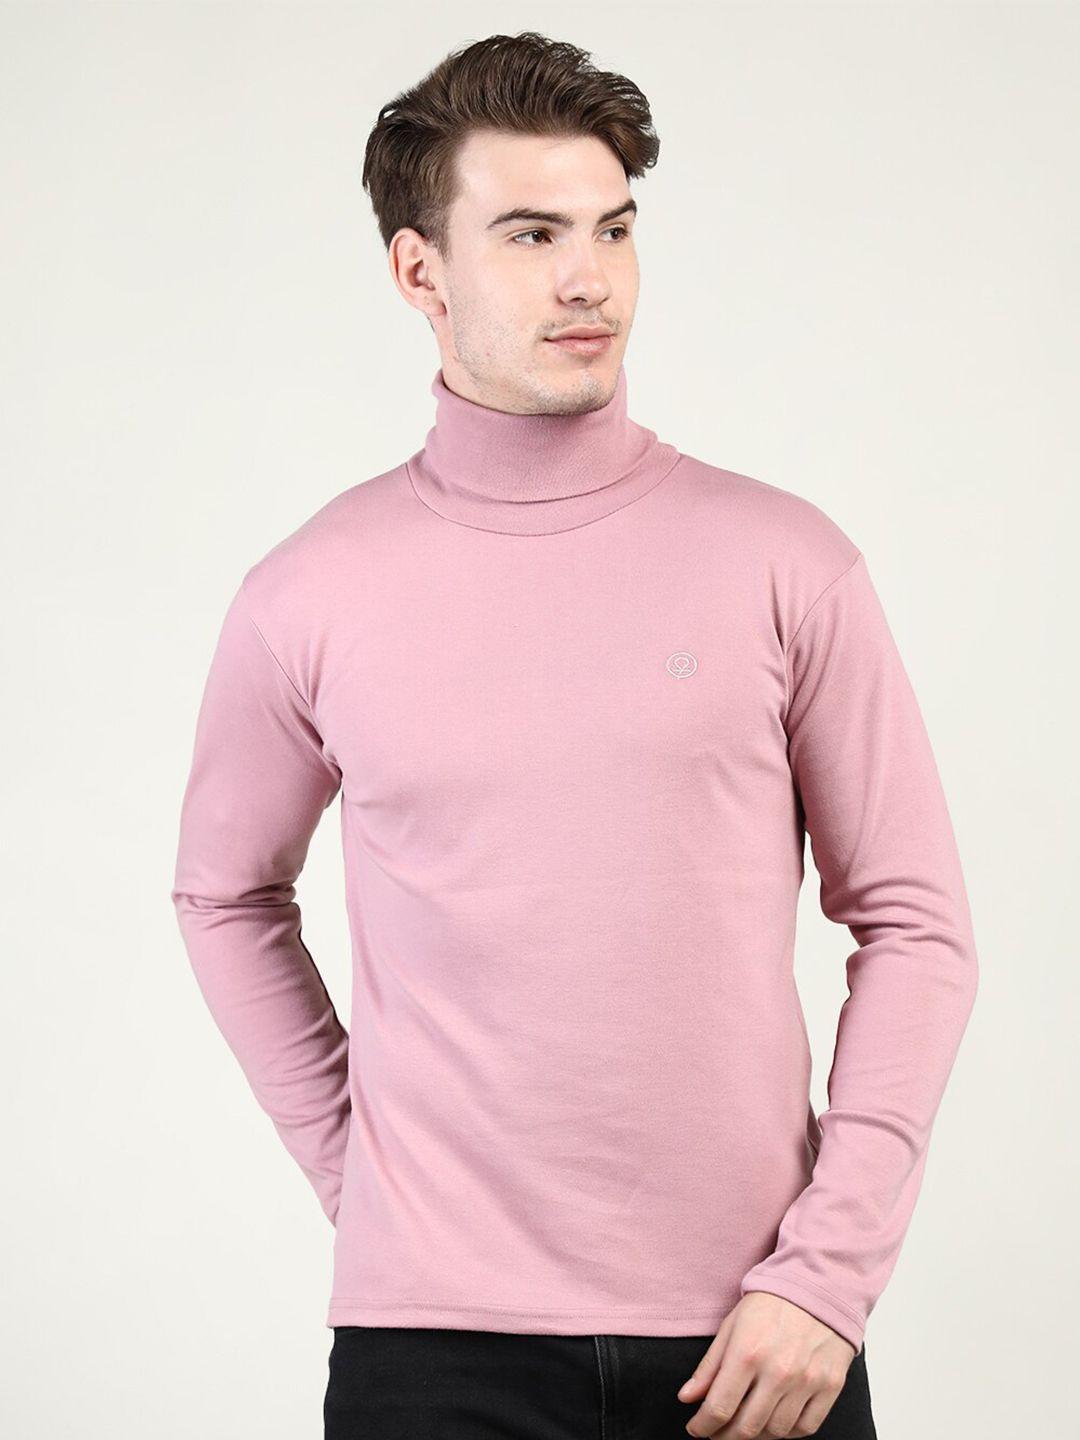 chkokko men pink cotton turtle neck t-shirt